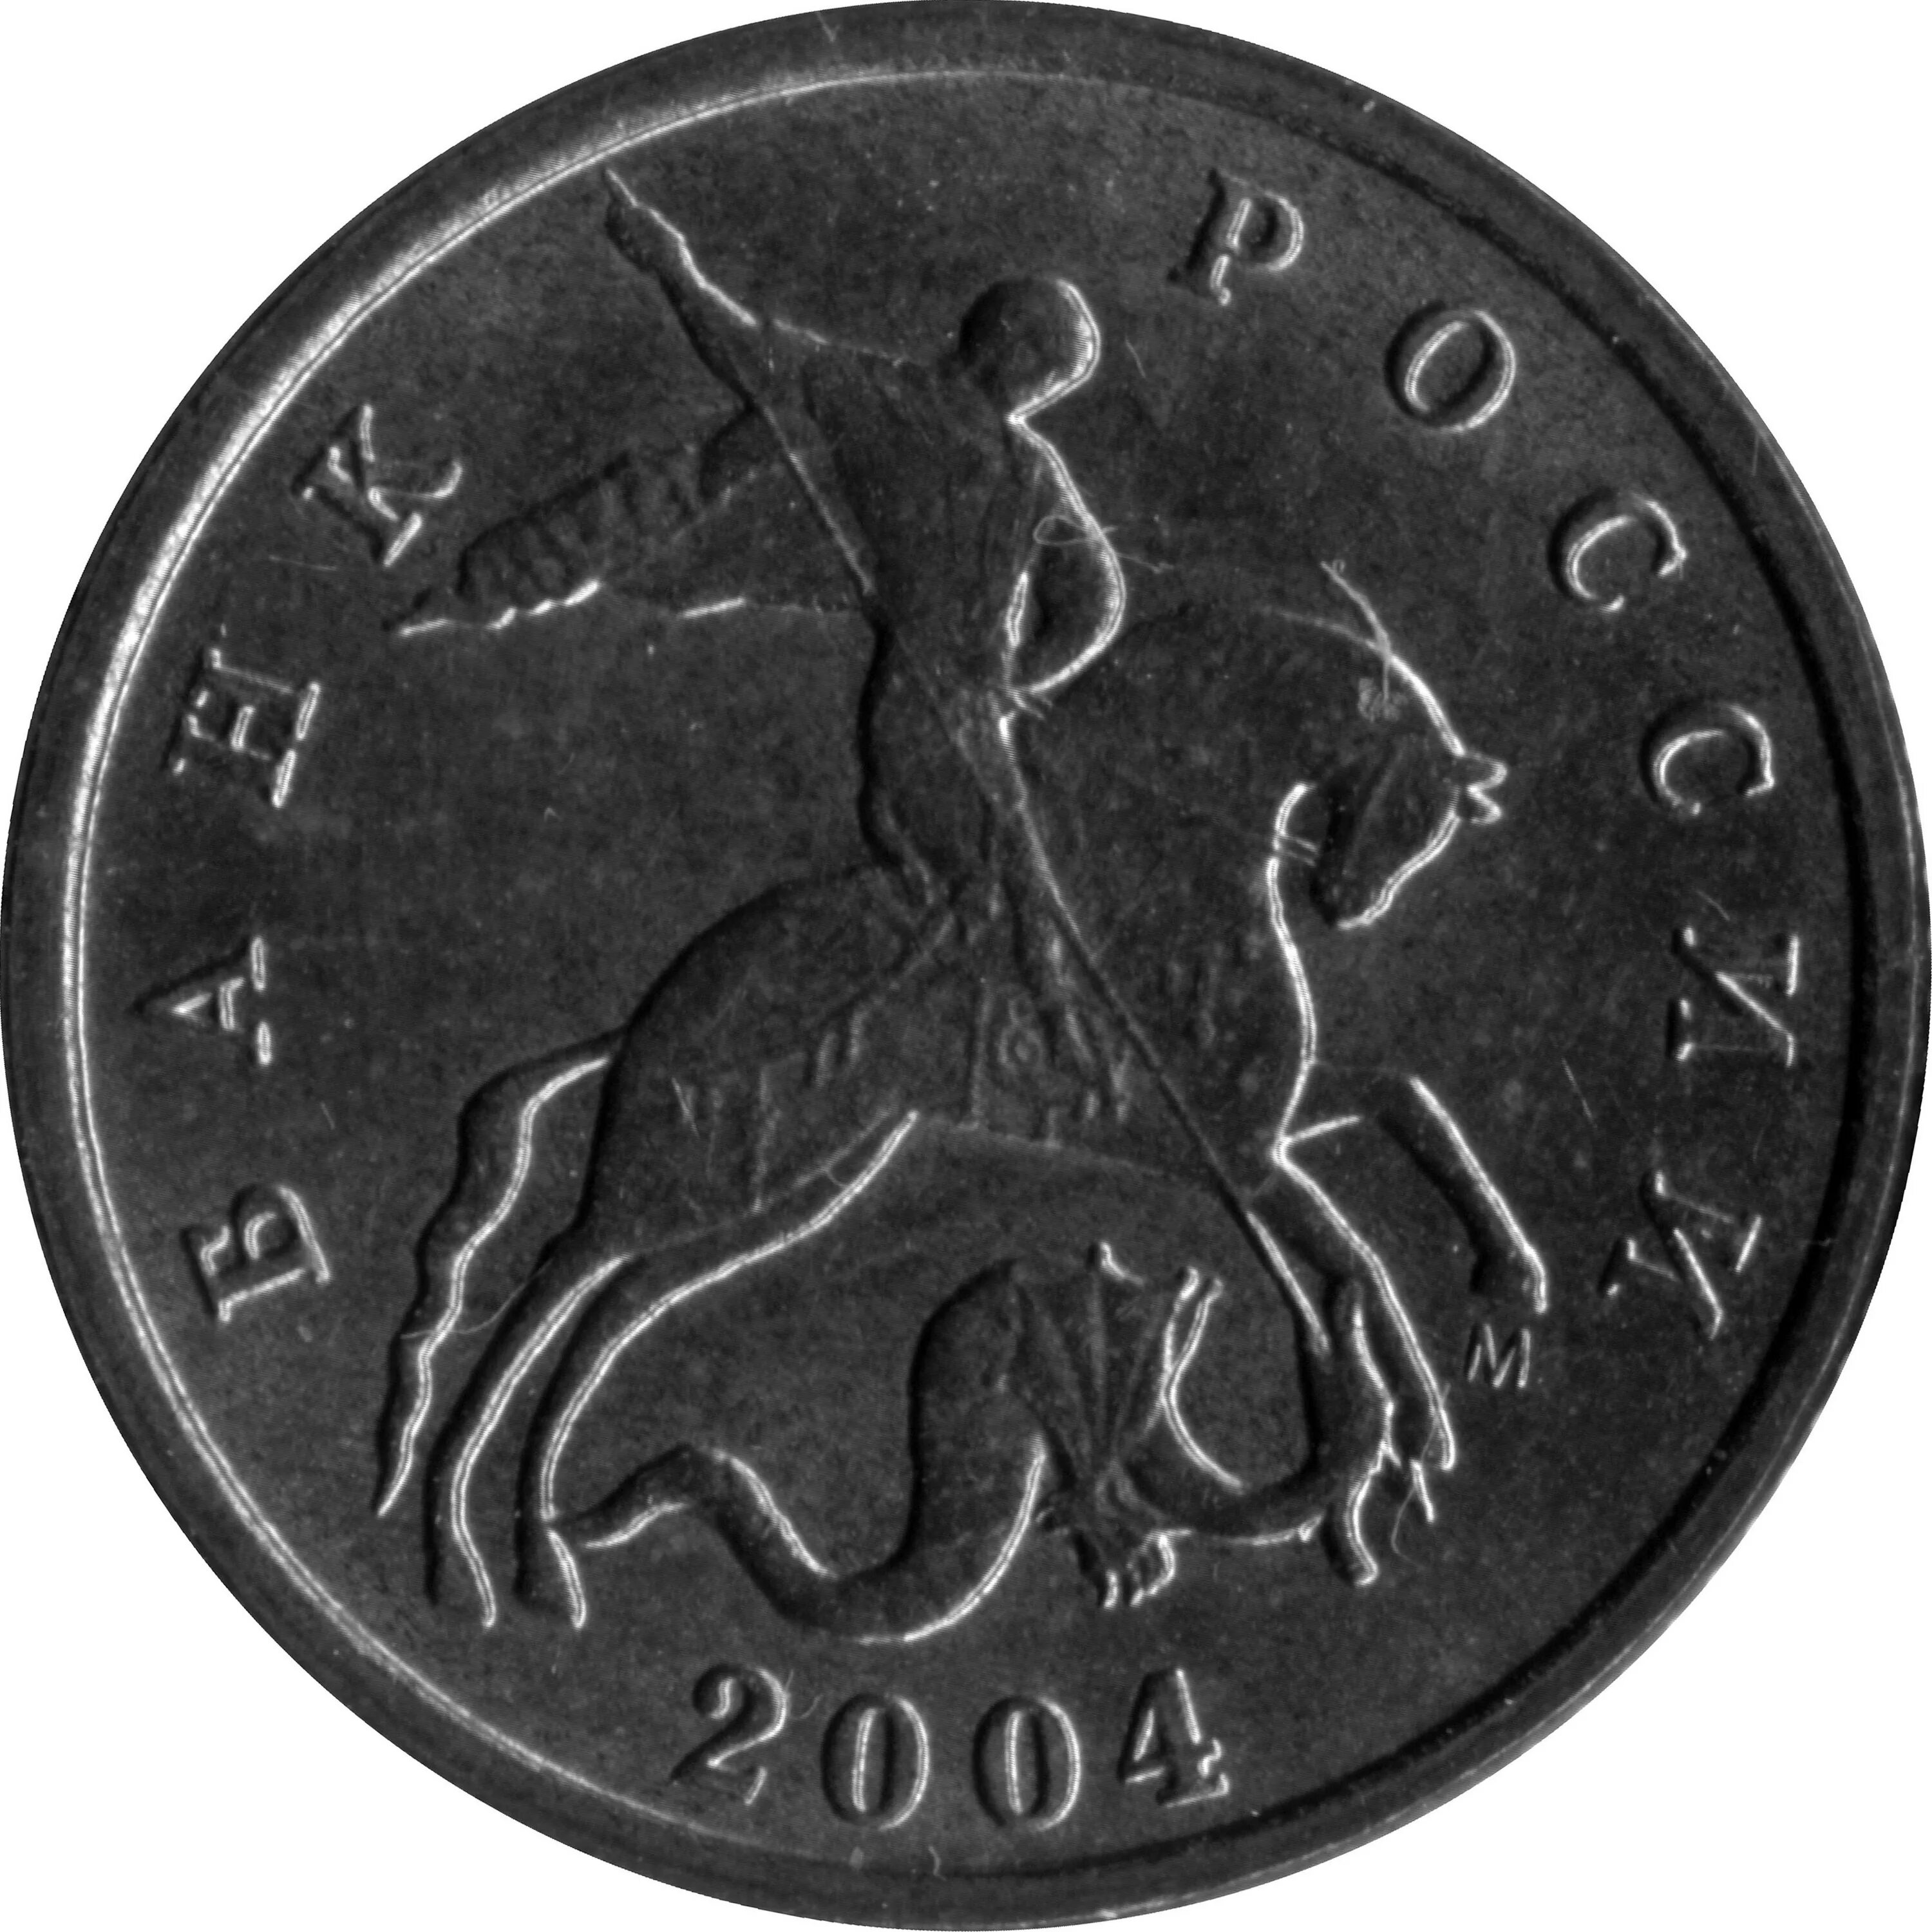 Монетка в 10 копеек. Монета 10 копеек 2004 СП. 10 Копеек 2004 м шт.1.3 а2. 5 Копеек 2004 м. Редкие 10 копеек 2004.